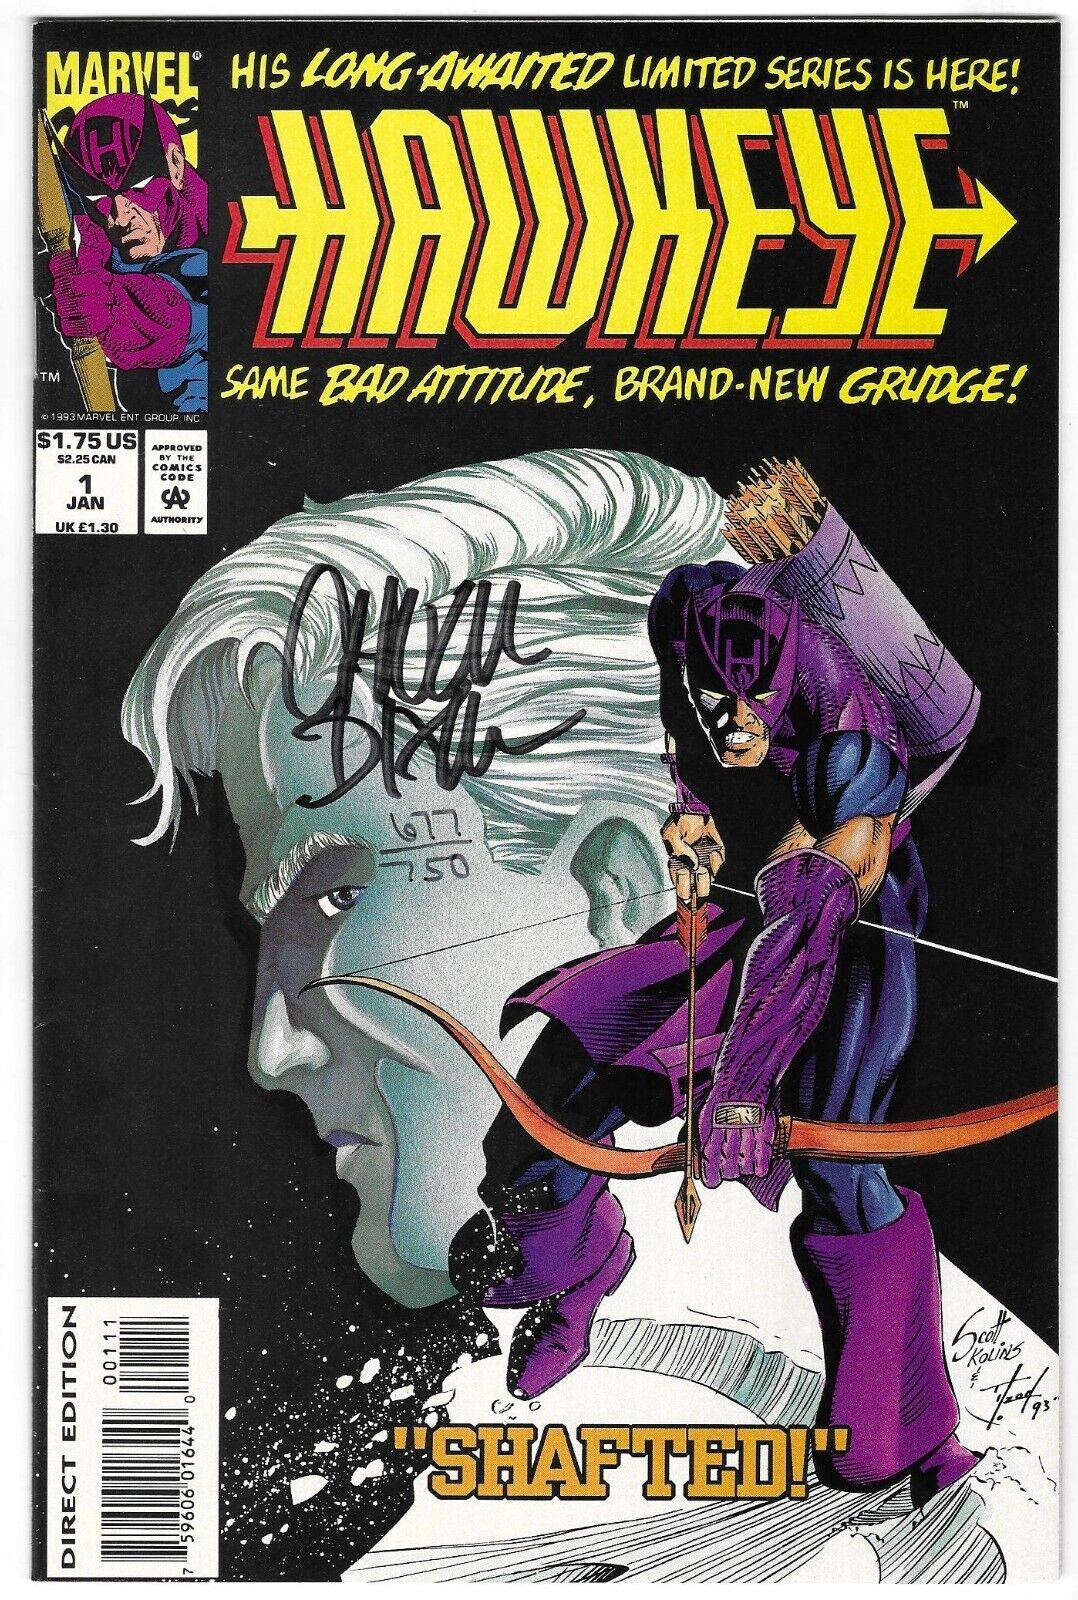 Hawkeye #1 MARVEL COMIC BOOK Avengers - Chuck Dixon AUTOGRAPHED 750 SIGNED COA